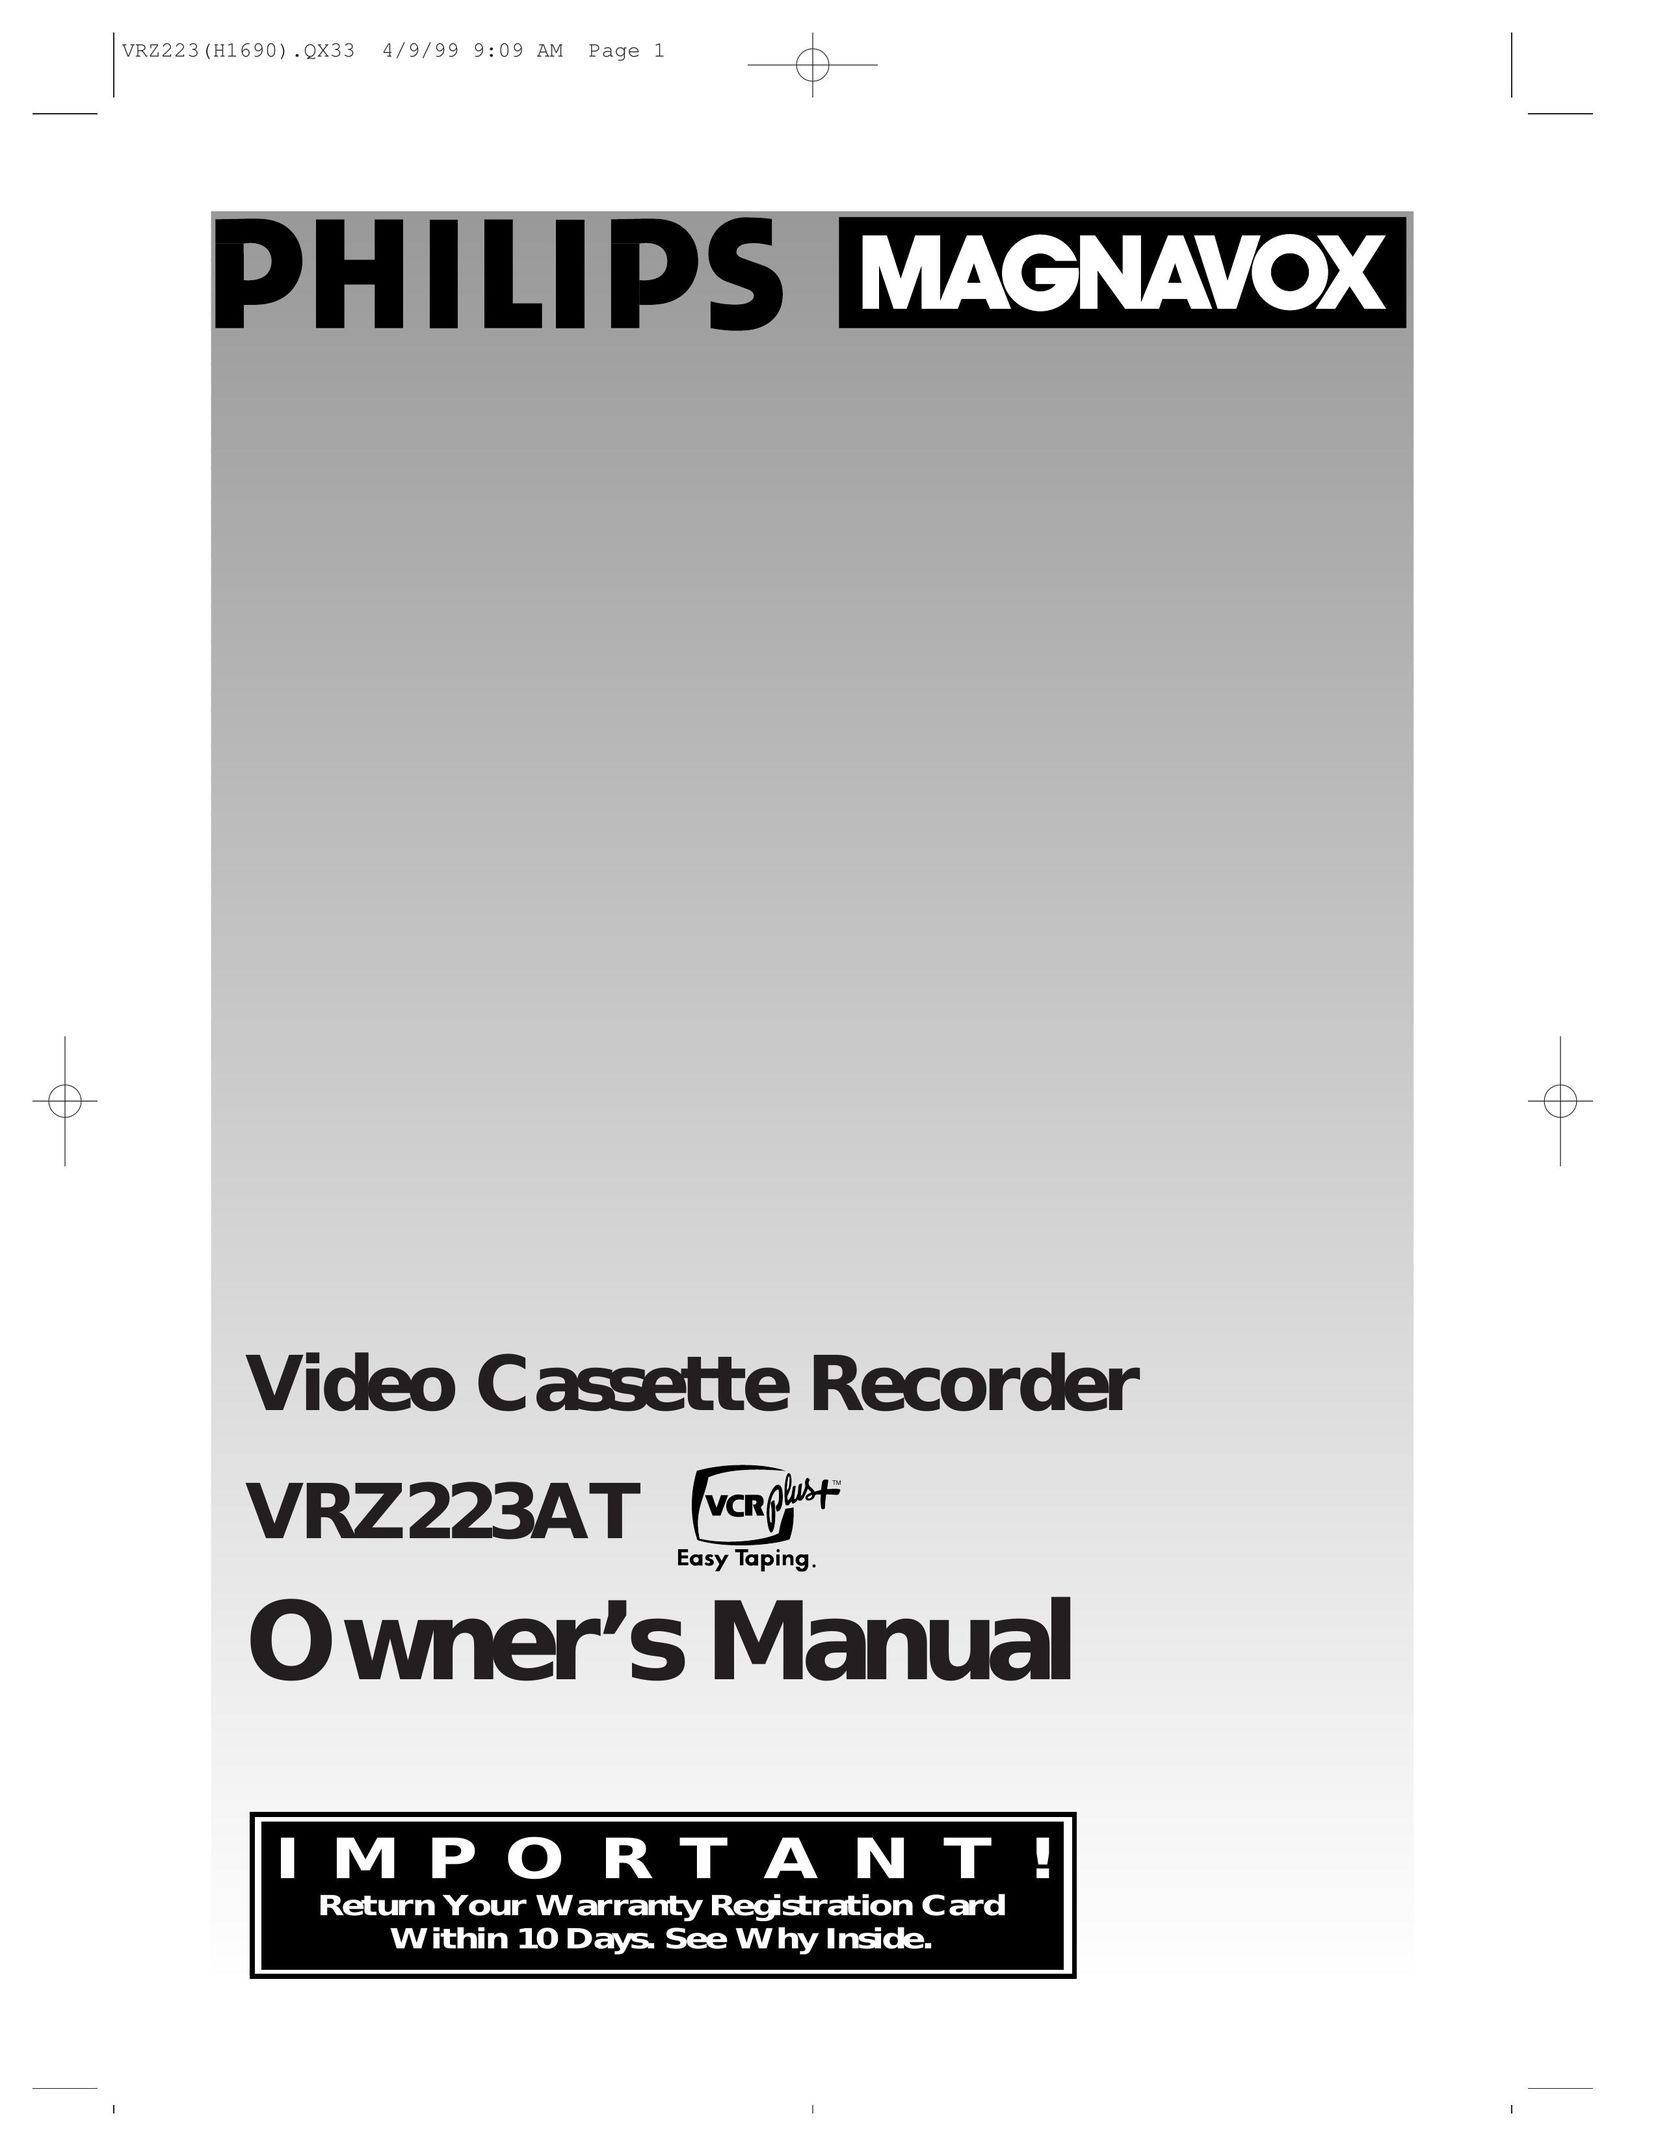 Magnavox VRZ223AT VCR User Manual